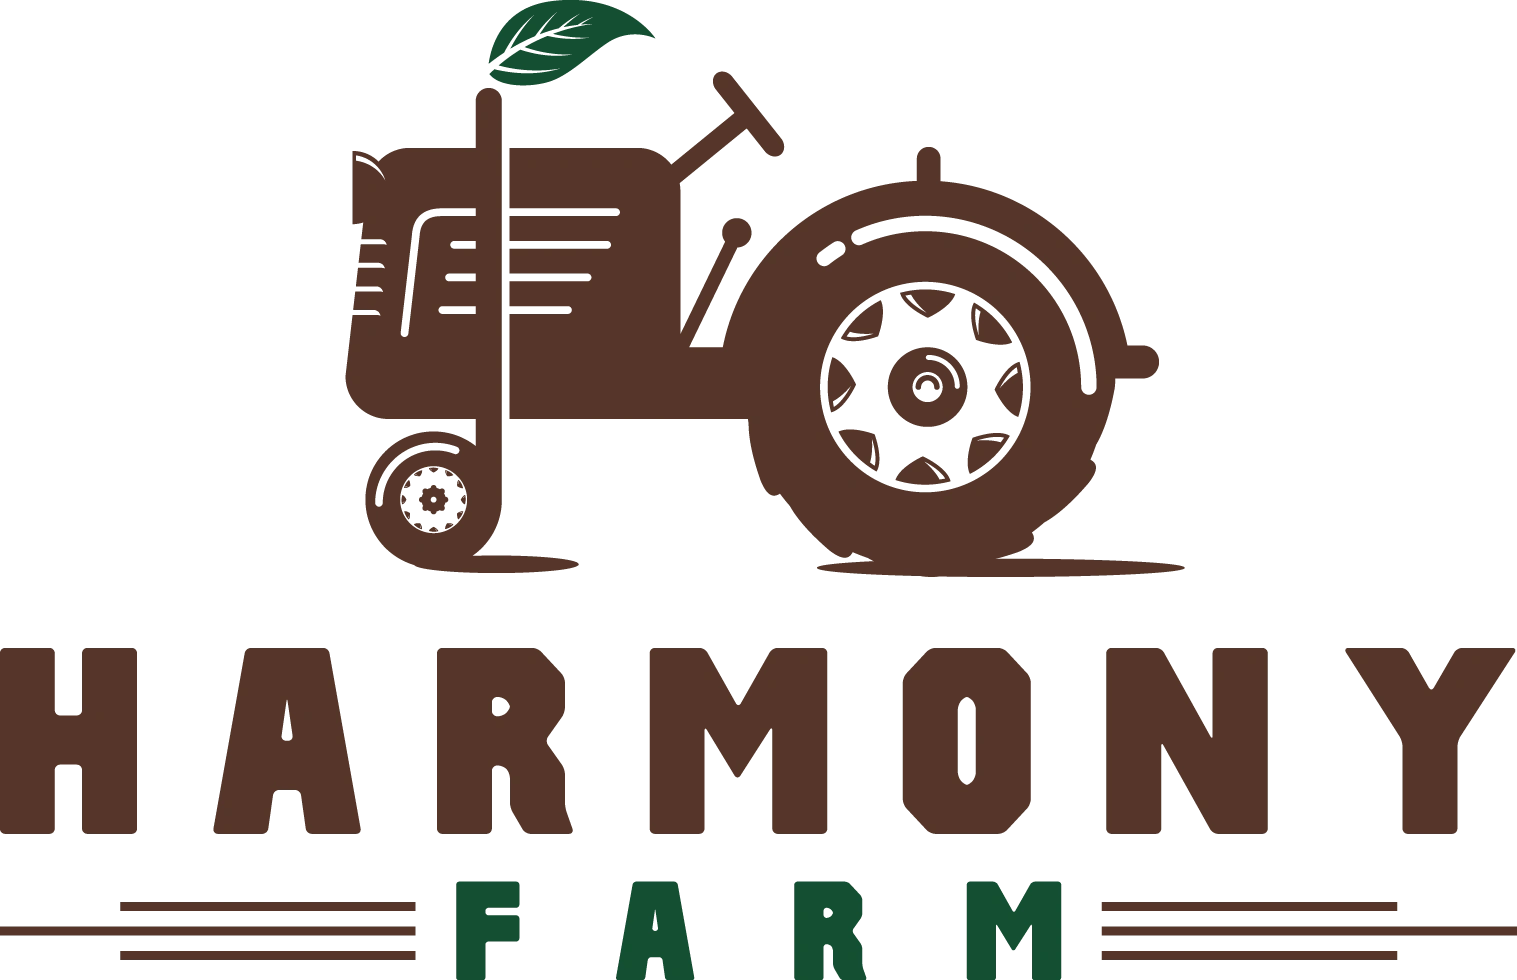 harmony farms turkey